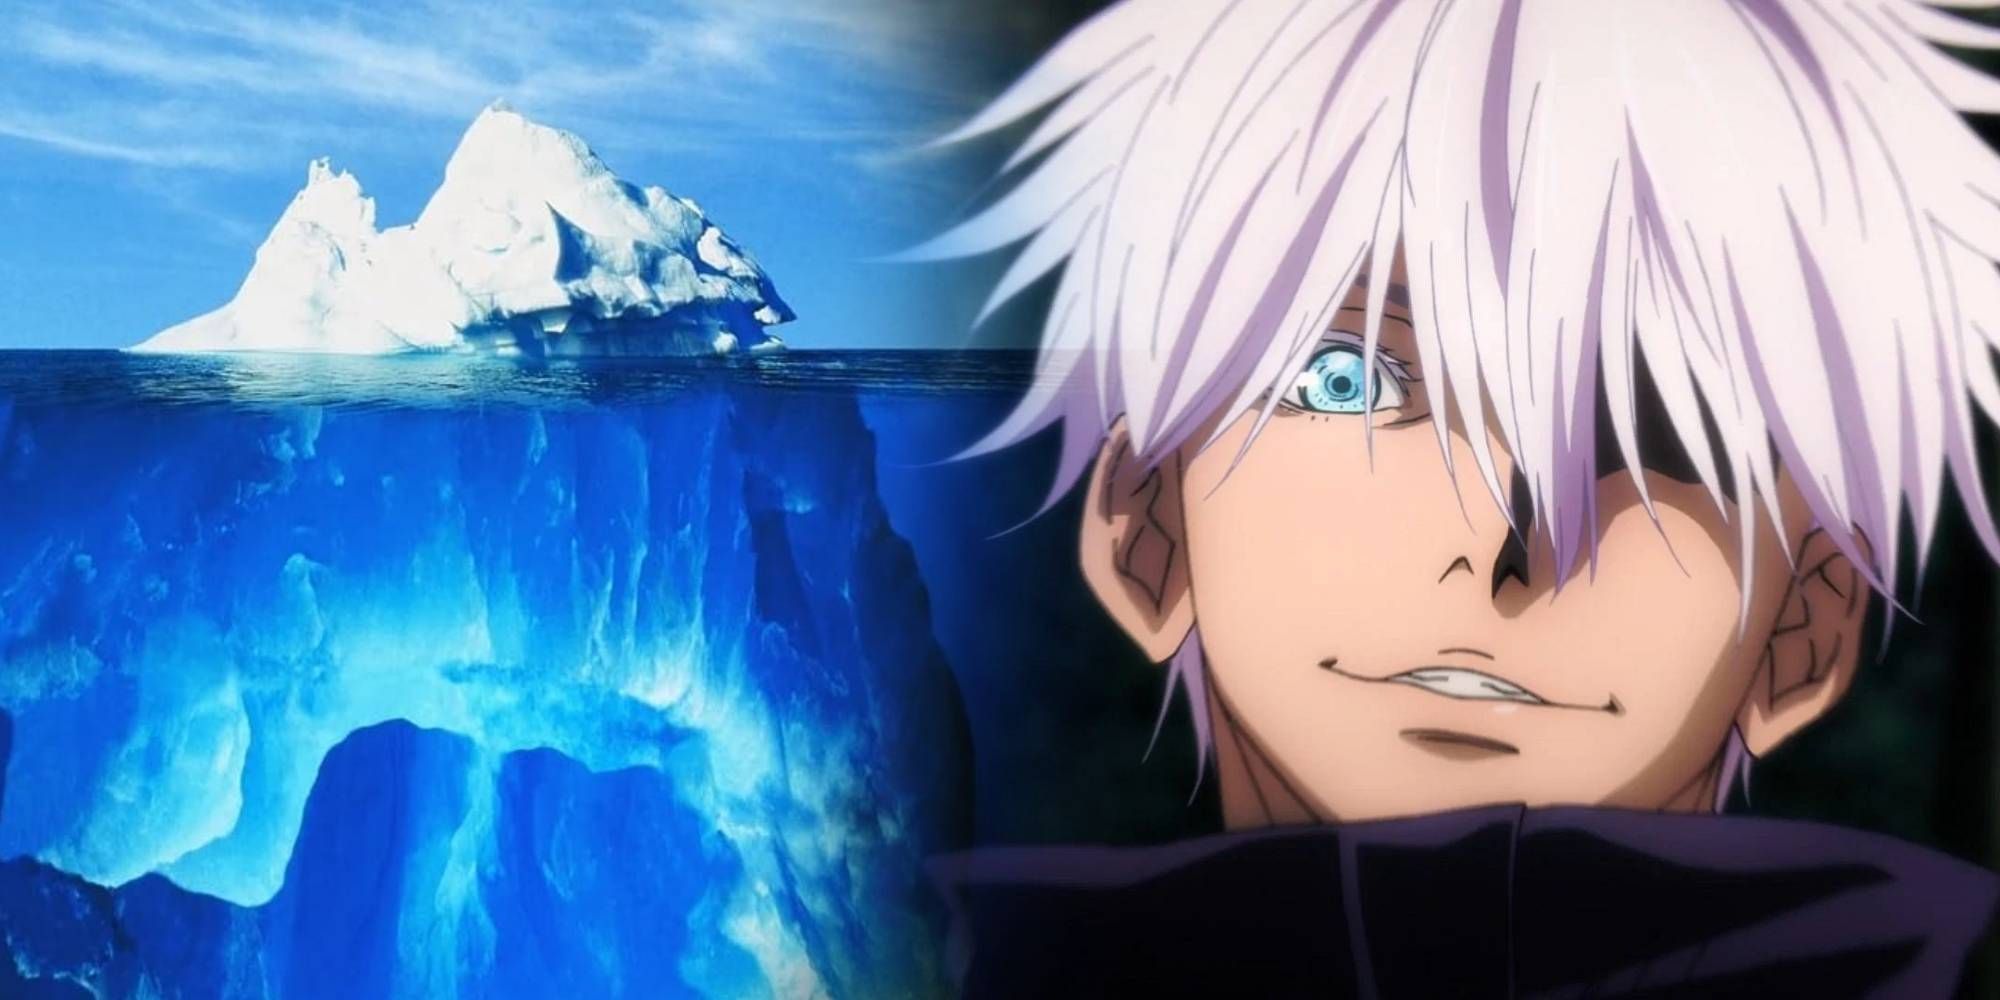 Berserk Manga / Anime | The Berserk Iceberg | Facebook